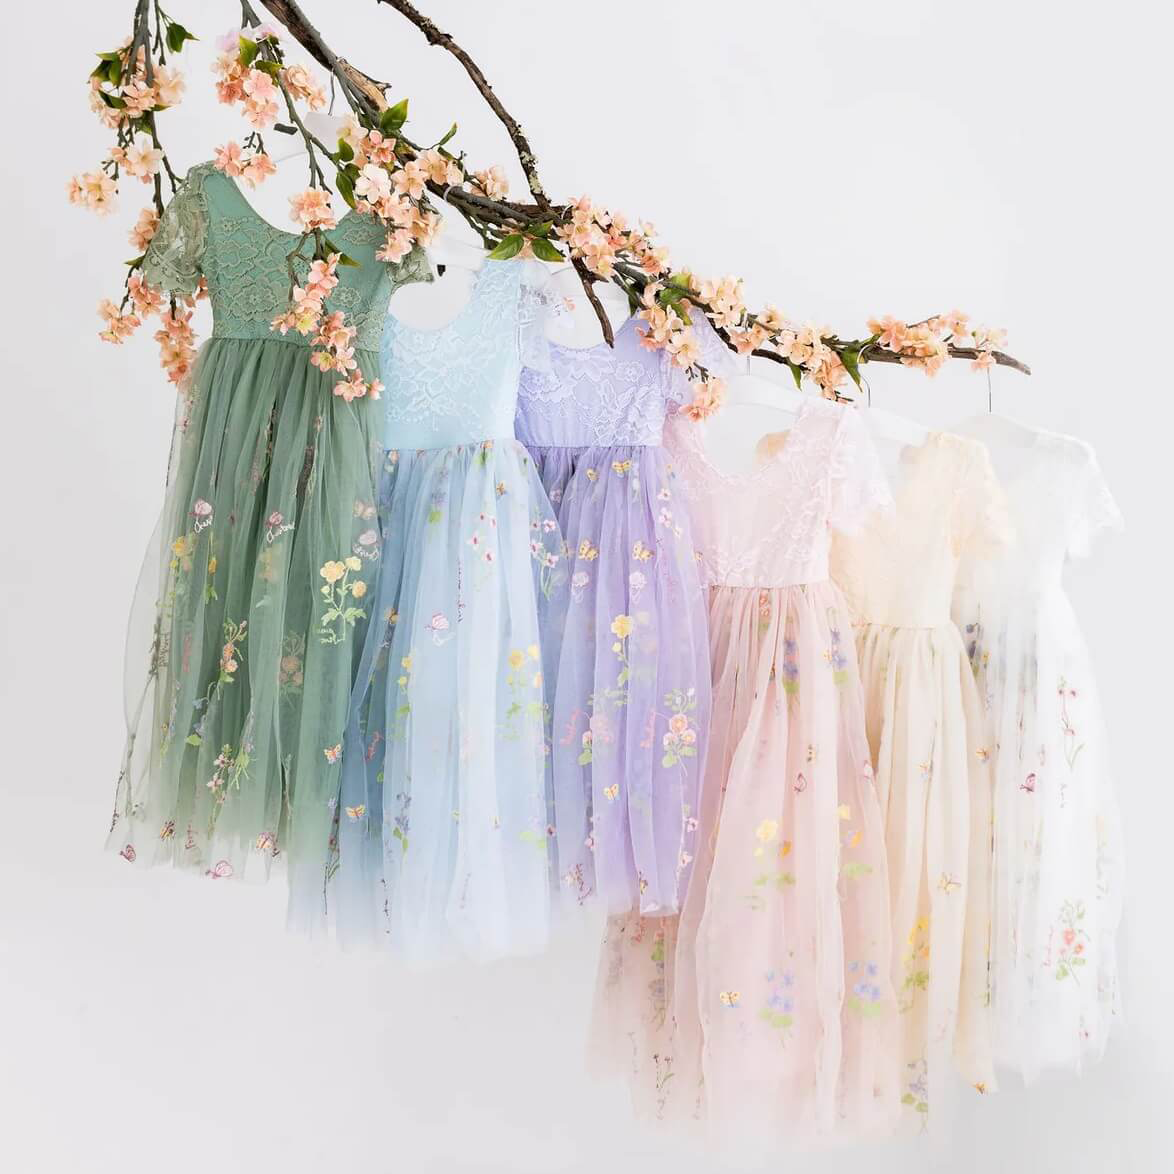 Dresses hanging in studio